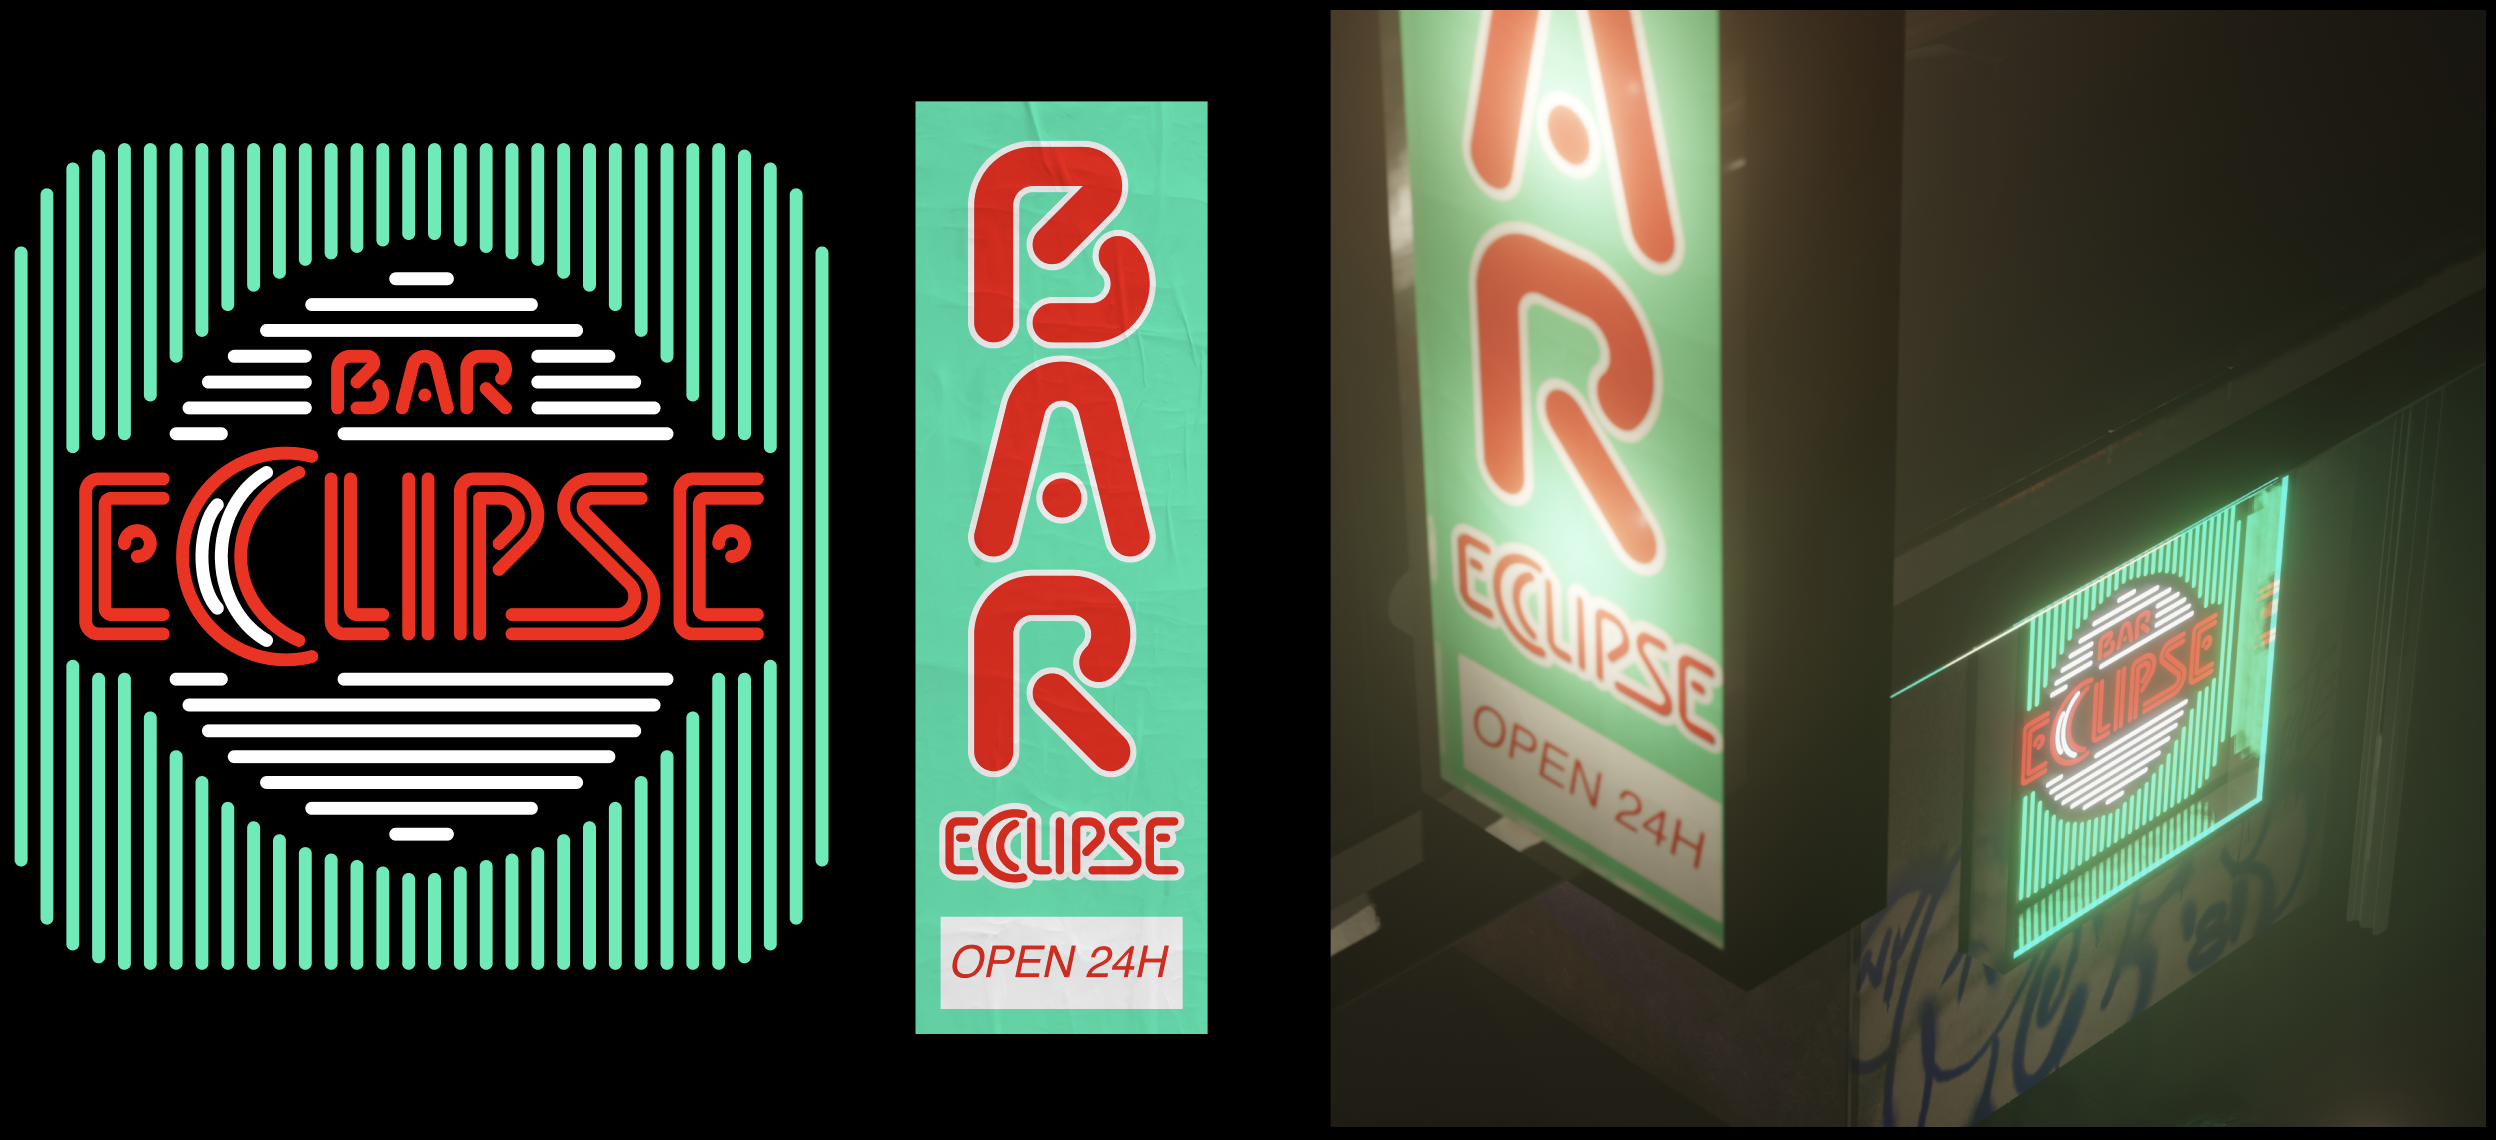 Bar Eclipse signage